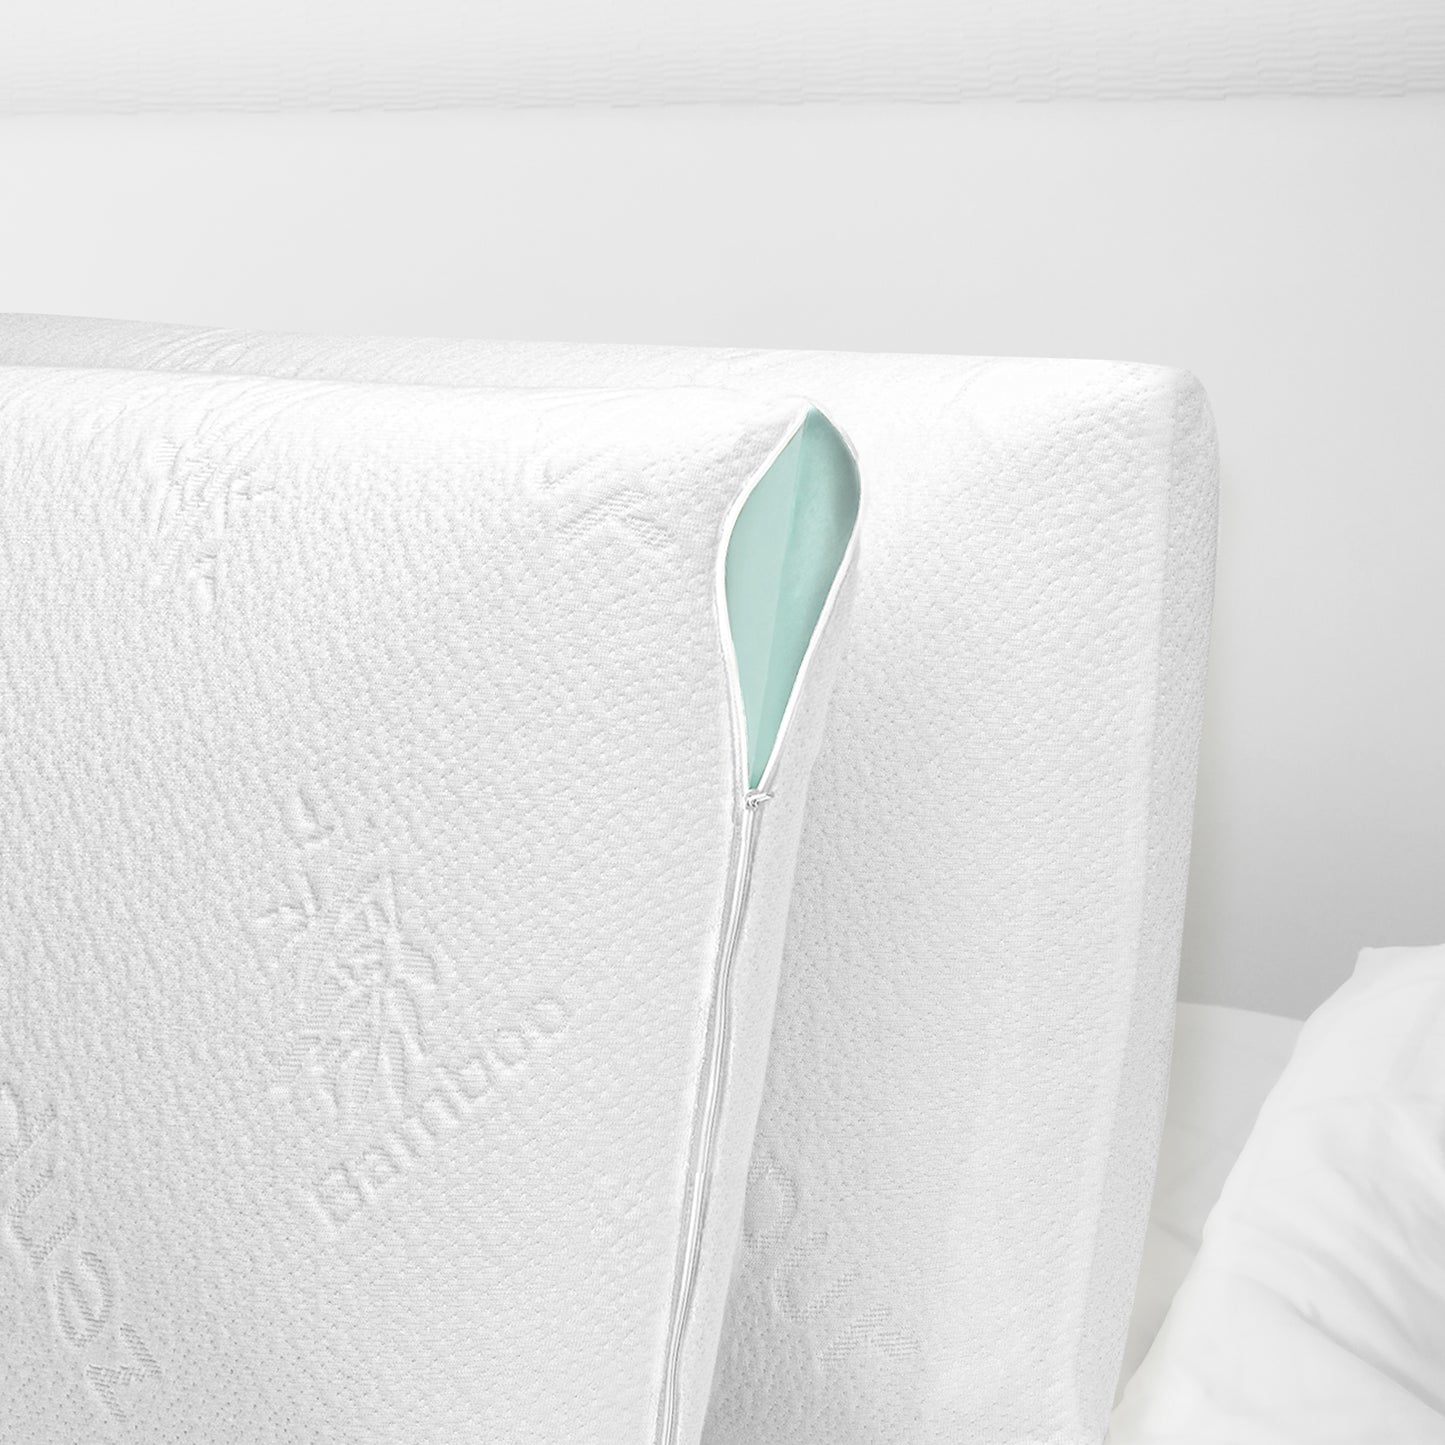 ZenPur - Ergonomic Cervical Memory Foam Pillow Designed in France & Made in Europe - Oeko Tex Certified.